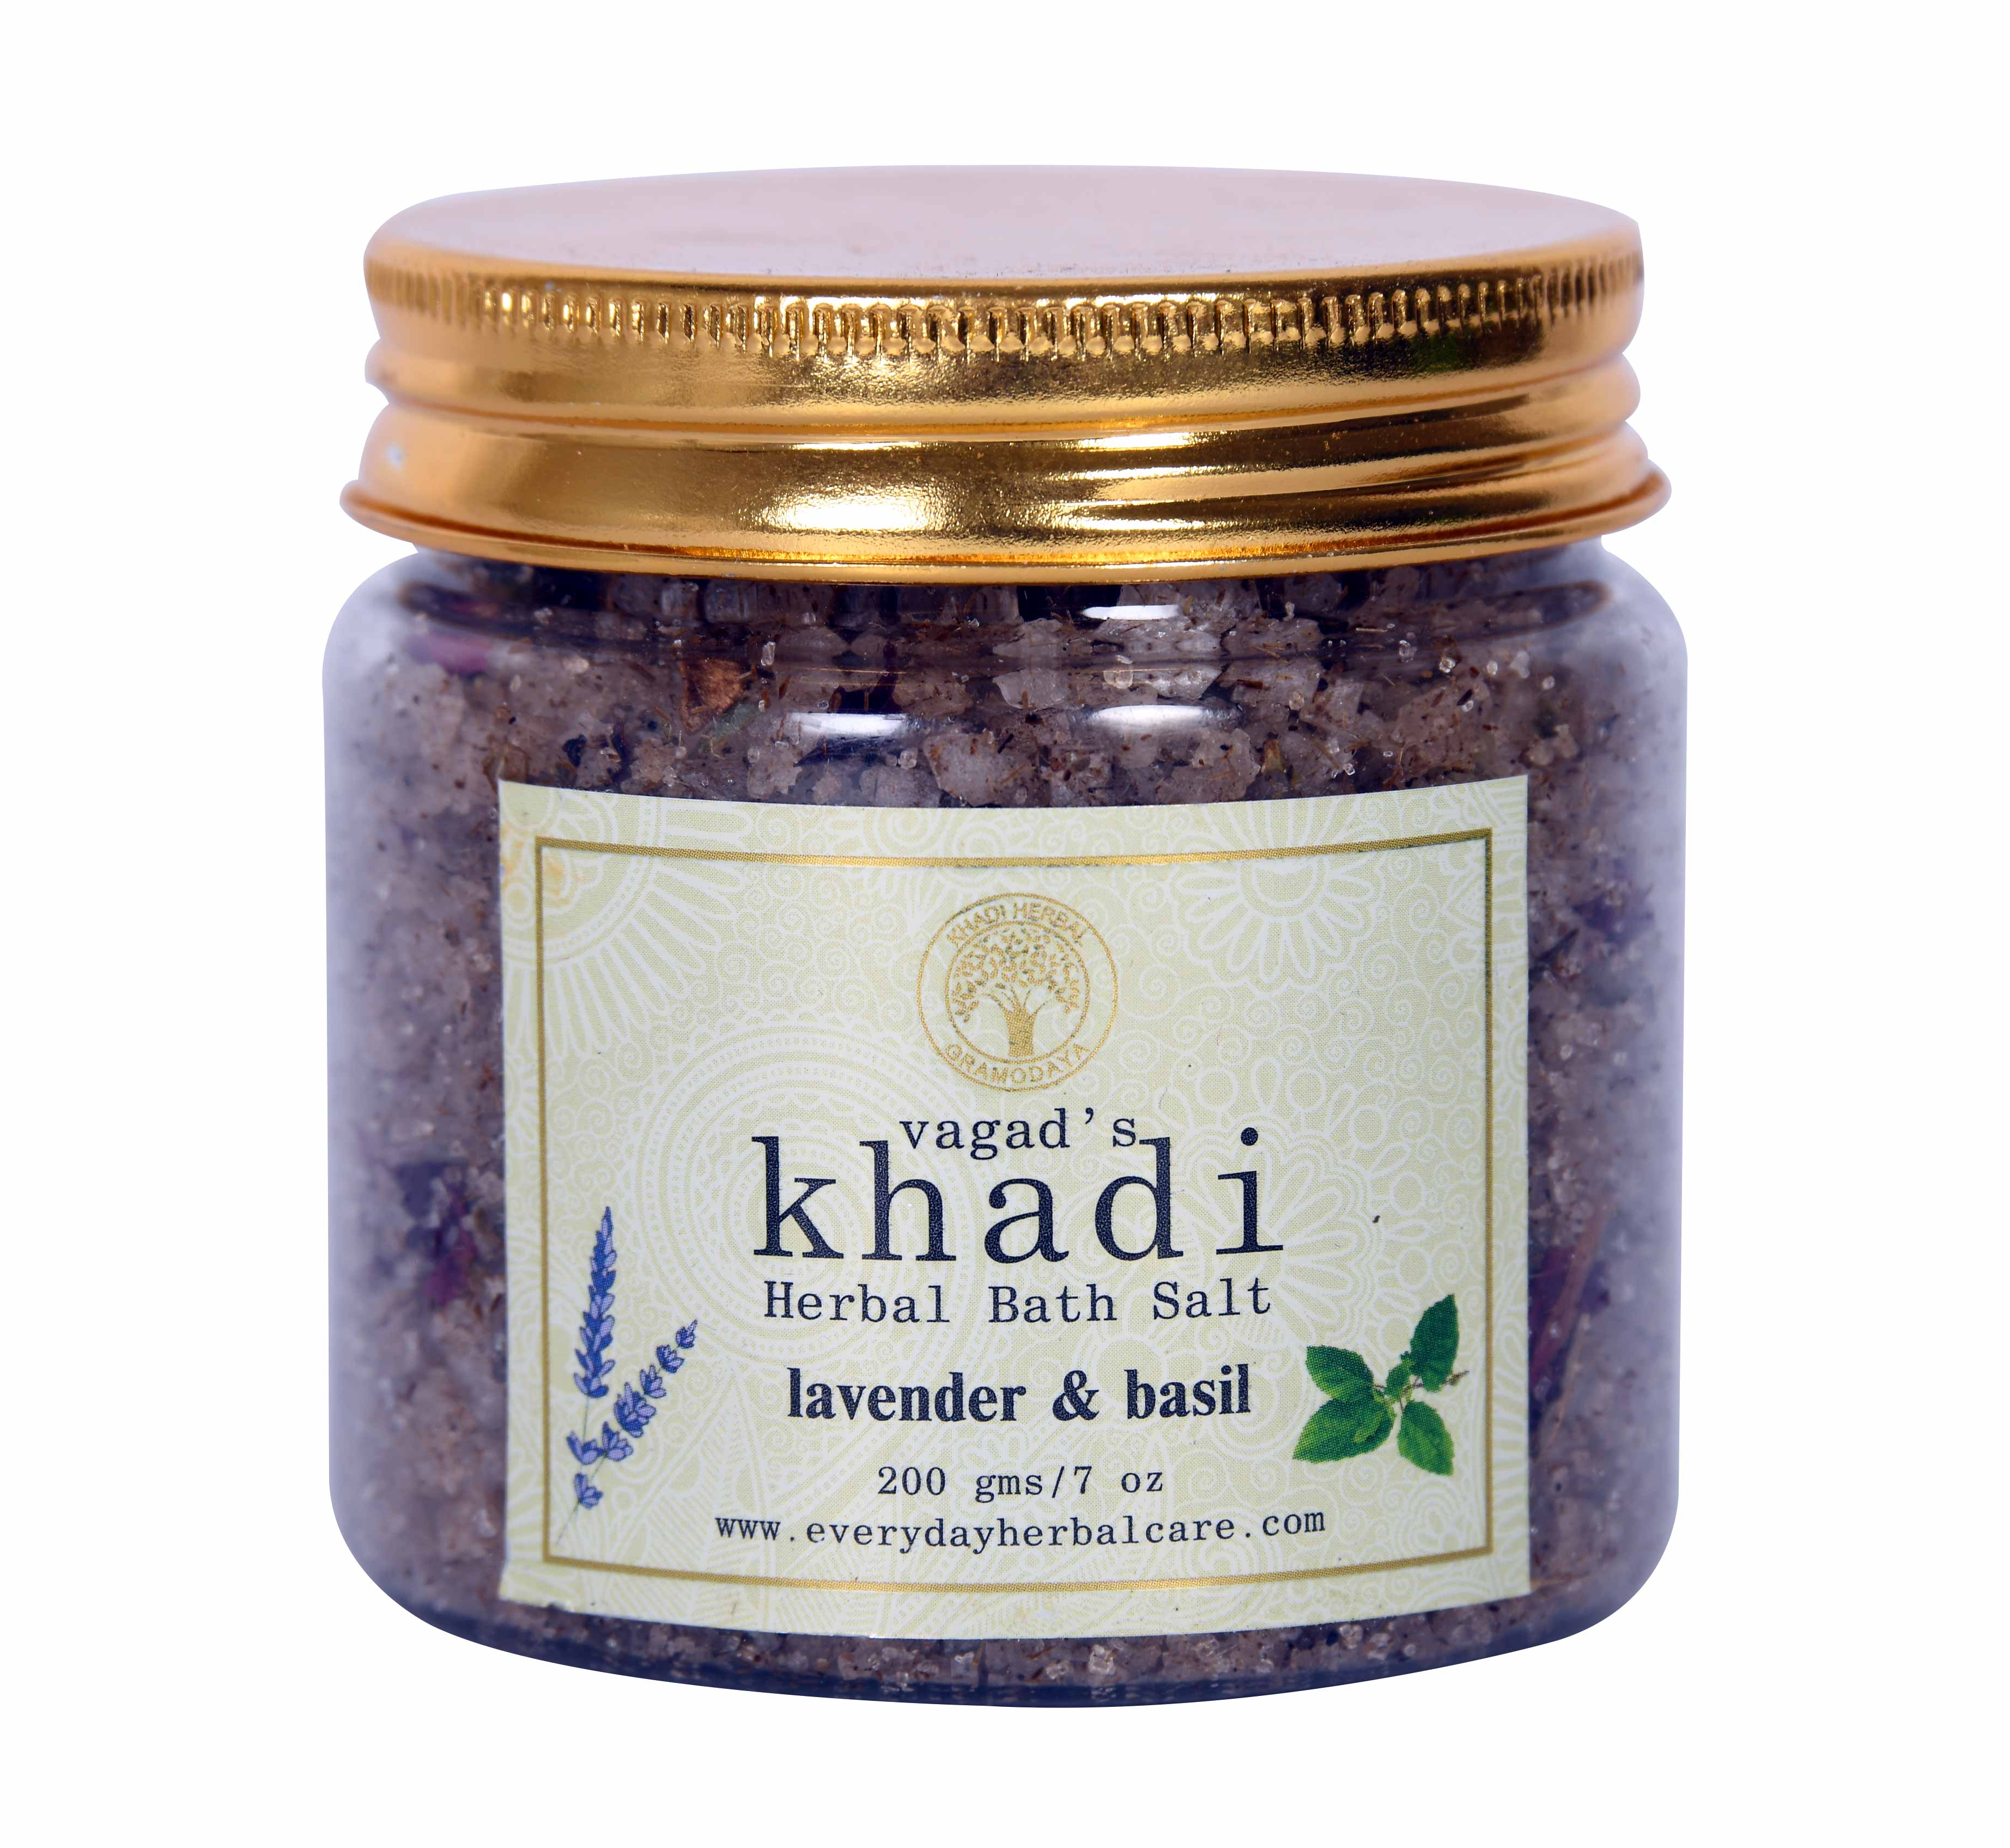 Buy Vagad's Khadi Lavender Basil Herbal Bath Salt at Best Price Online